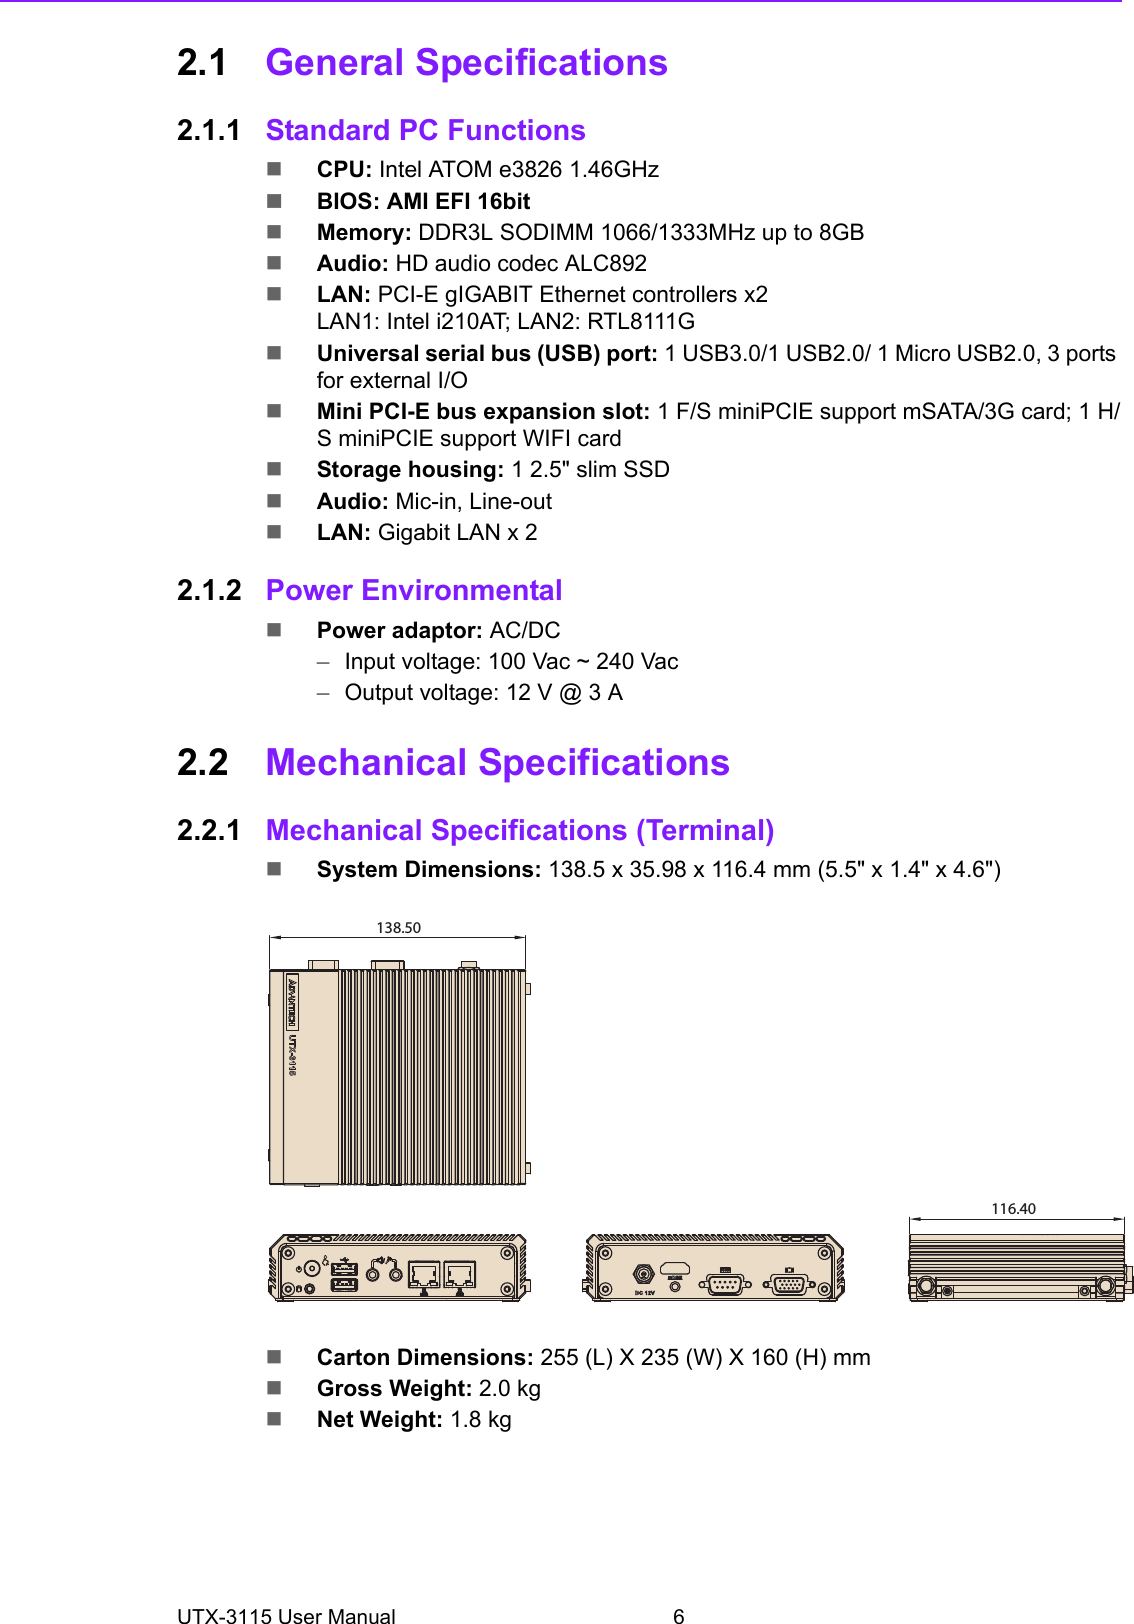 UTX-3115 User Manual 62.1 General Specifications2.1.1 Standard PC FunctionsCPU: Intel ATOM e3826 1.46GHzBIOS: AMI EFI 16bitMemory: DDR3L SODIMM 1066/1333MHz up to 8GBAudio: HD audio codec ALC892LAN: PCI-E gIGABIT Ethernet controllers x2LAN1: Intel i210AT; LAN2: RTL8111G Universal serial bus (USB) port: 1 USB3.0/1 USB2.0/ 1 Micro USB2.0, 3 ports for external I/OMini PCI-E bus expansion slot: 1 F/S miniPCIE support mSATA/3G card; 1 H/S miniPCIE support WIFI cardStorage housing: 1 2.5&quot; slim SSDAudio: Mic-in, Line-outLAN: Gigabit LAN x 22.1.2 Power EnvironmentalPower adaptor: AC/DC–Input voltage: 100 Vac ~ 240 Vac–Output voltage: 12 V @ 3 A2.2 Mechanical Specifications2.2.1 Mechanical Specifications (Terminal)System Dimensions: 138.5 x 35.98 x 116.4 mm (5.5&quot; x 1.4&quot; x 4.6&quot;)   Carton Dimensions: 255 (L) X 235 (W) X 160 (H) mmGross Weight: 2.0 kgNet Weight: 1.8 kg138.50116.40